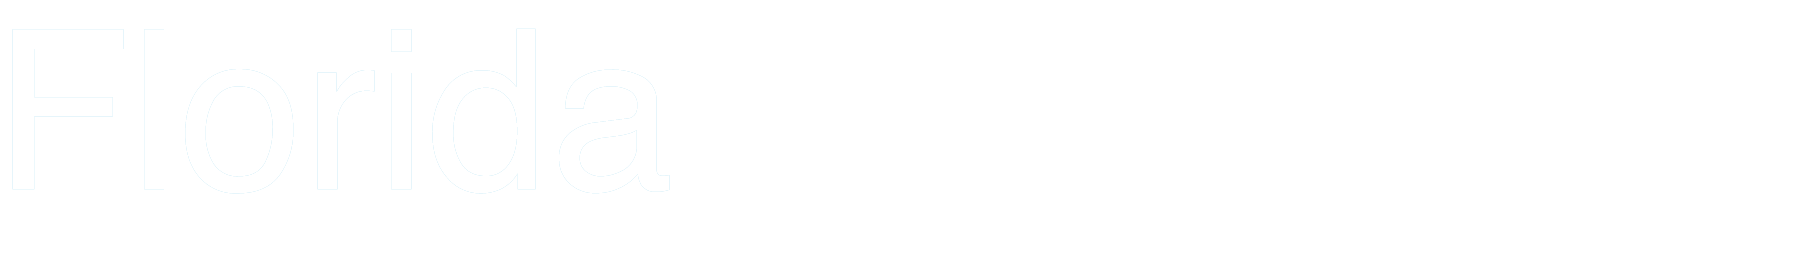 ExpertNet word logo